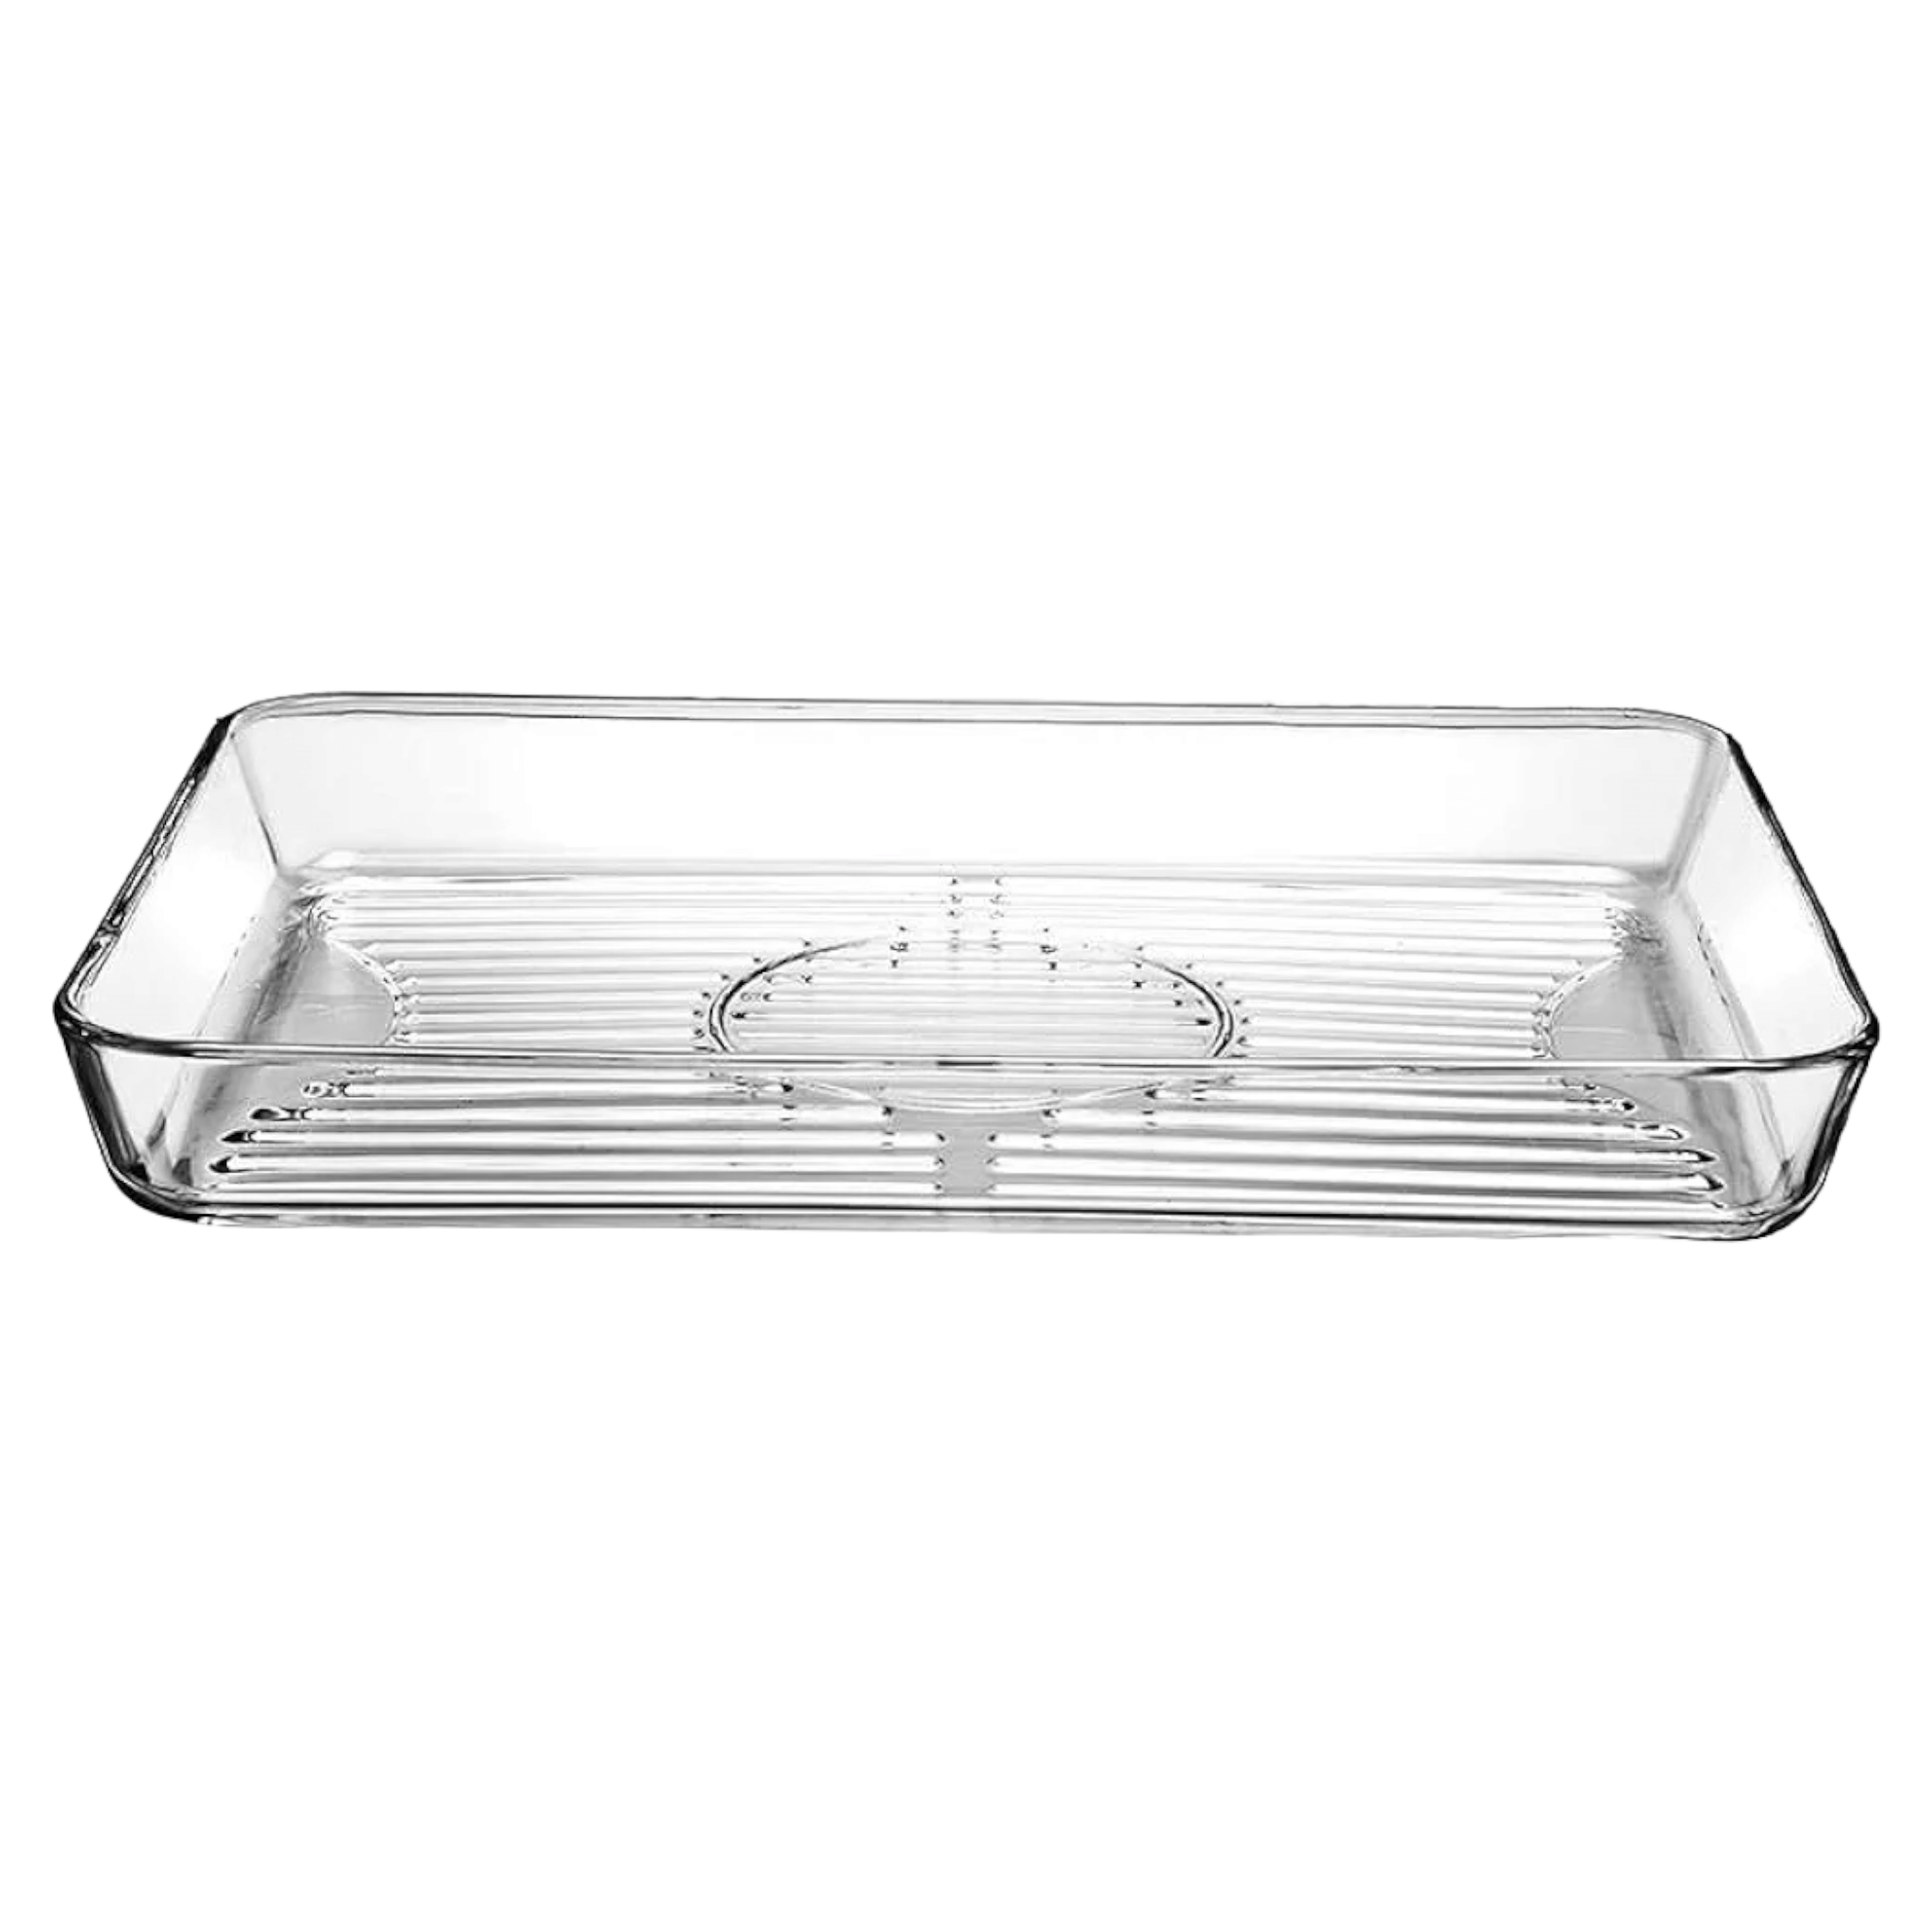 Borcam Glass Serving Dish Tray Rectangular 400x270mm 23309